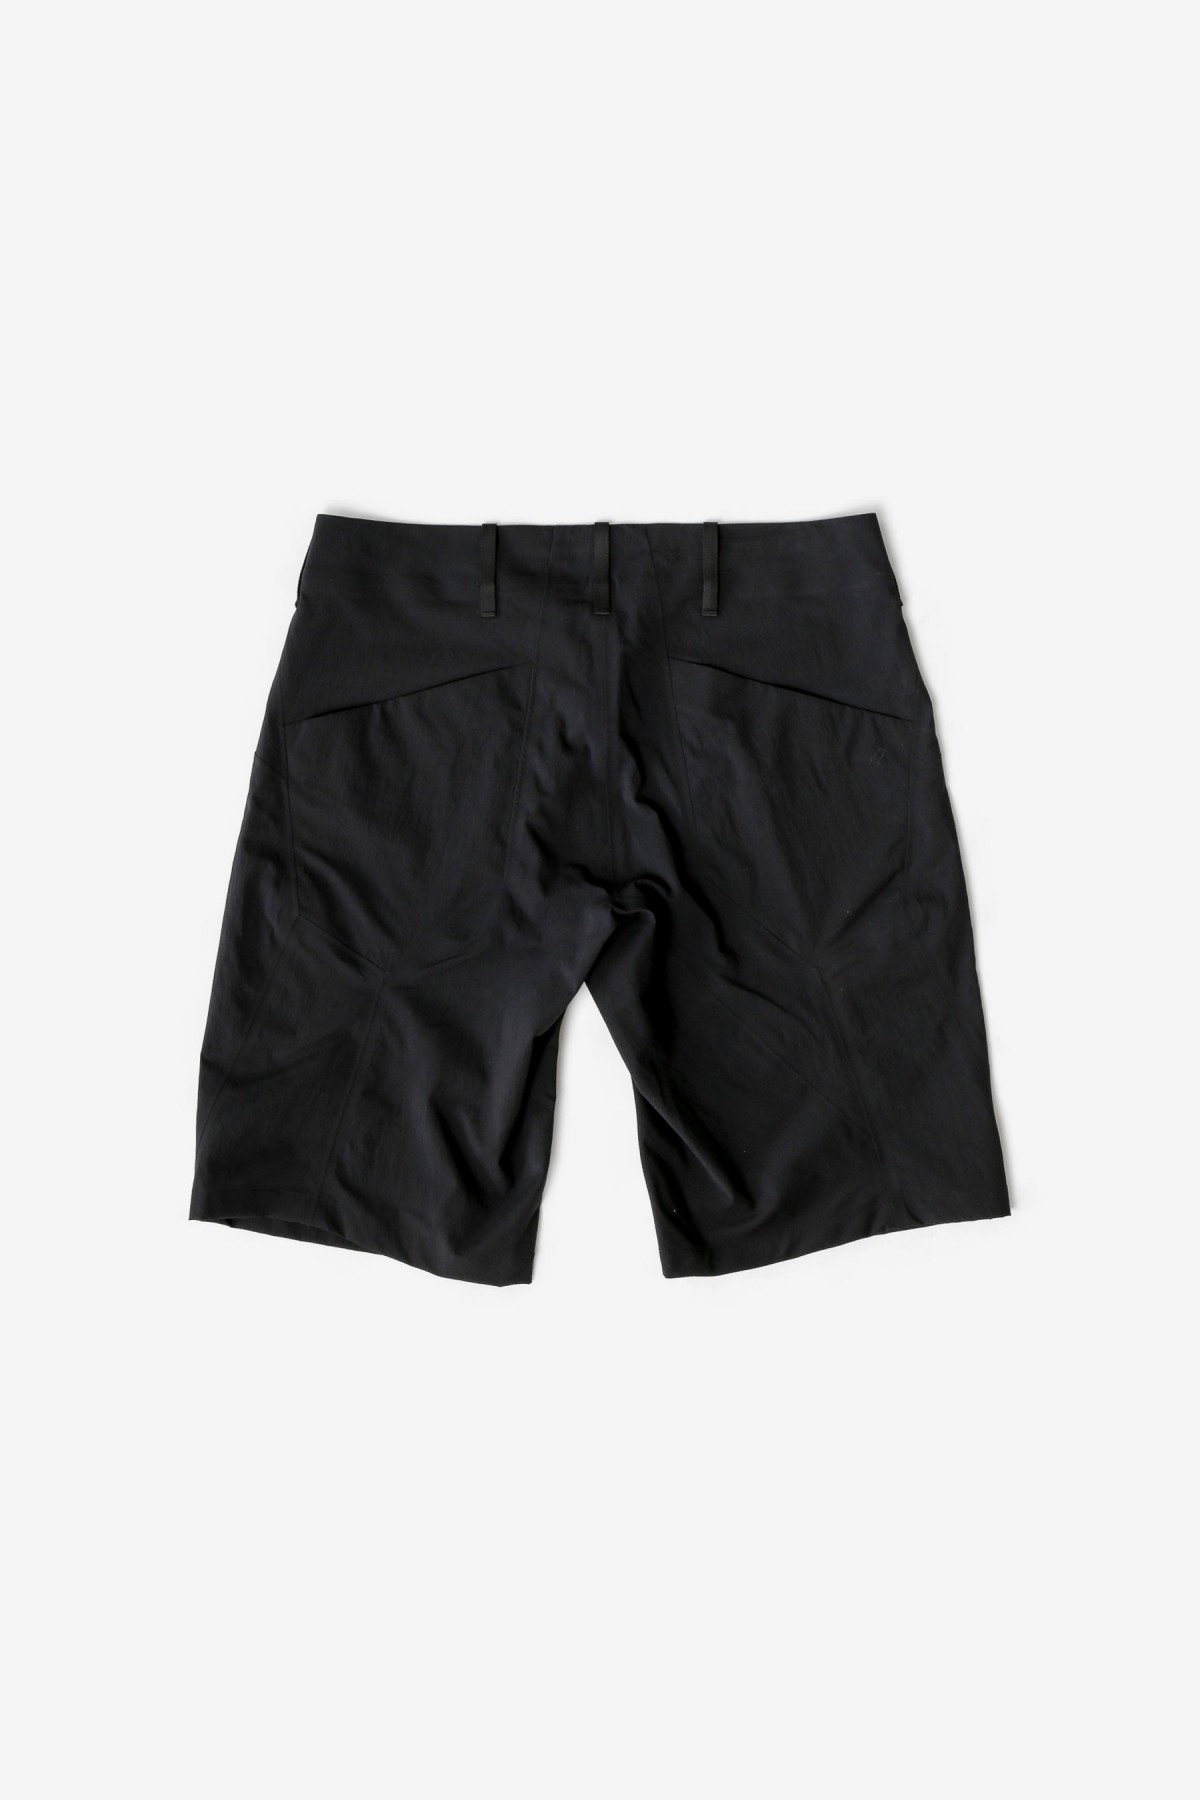  Voronoi LT Shorts in Black